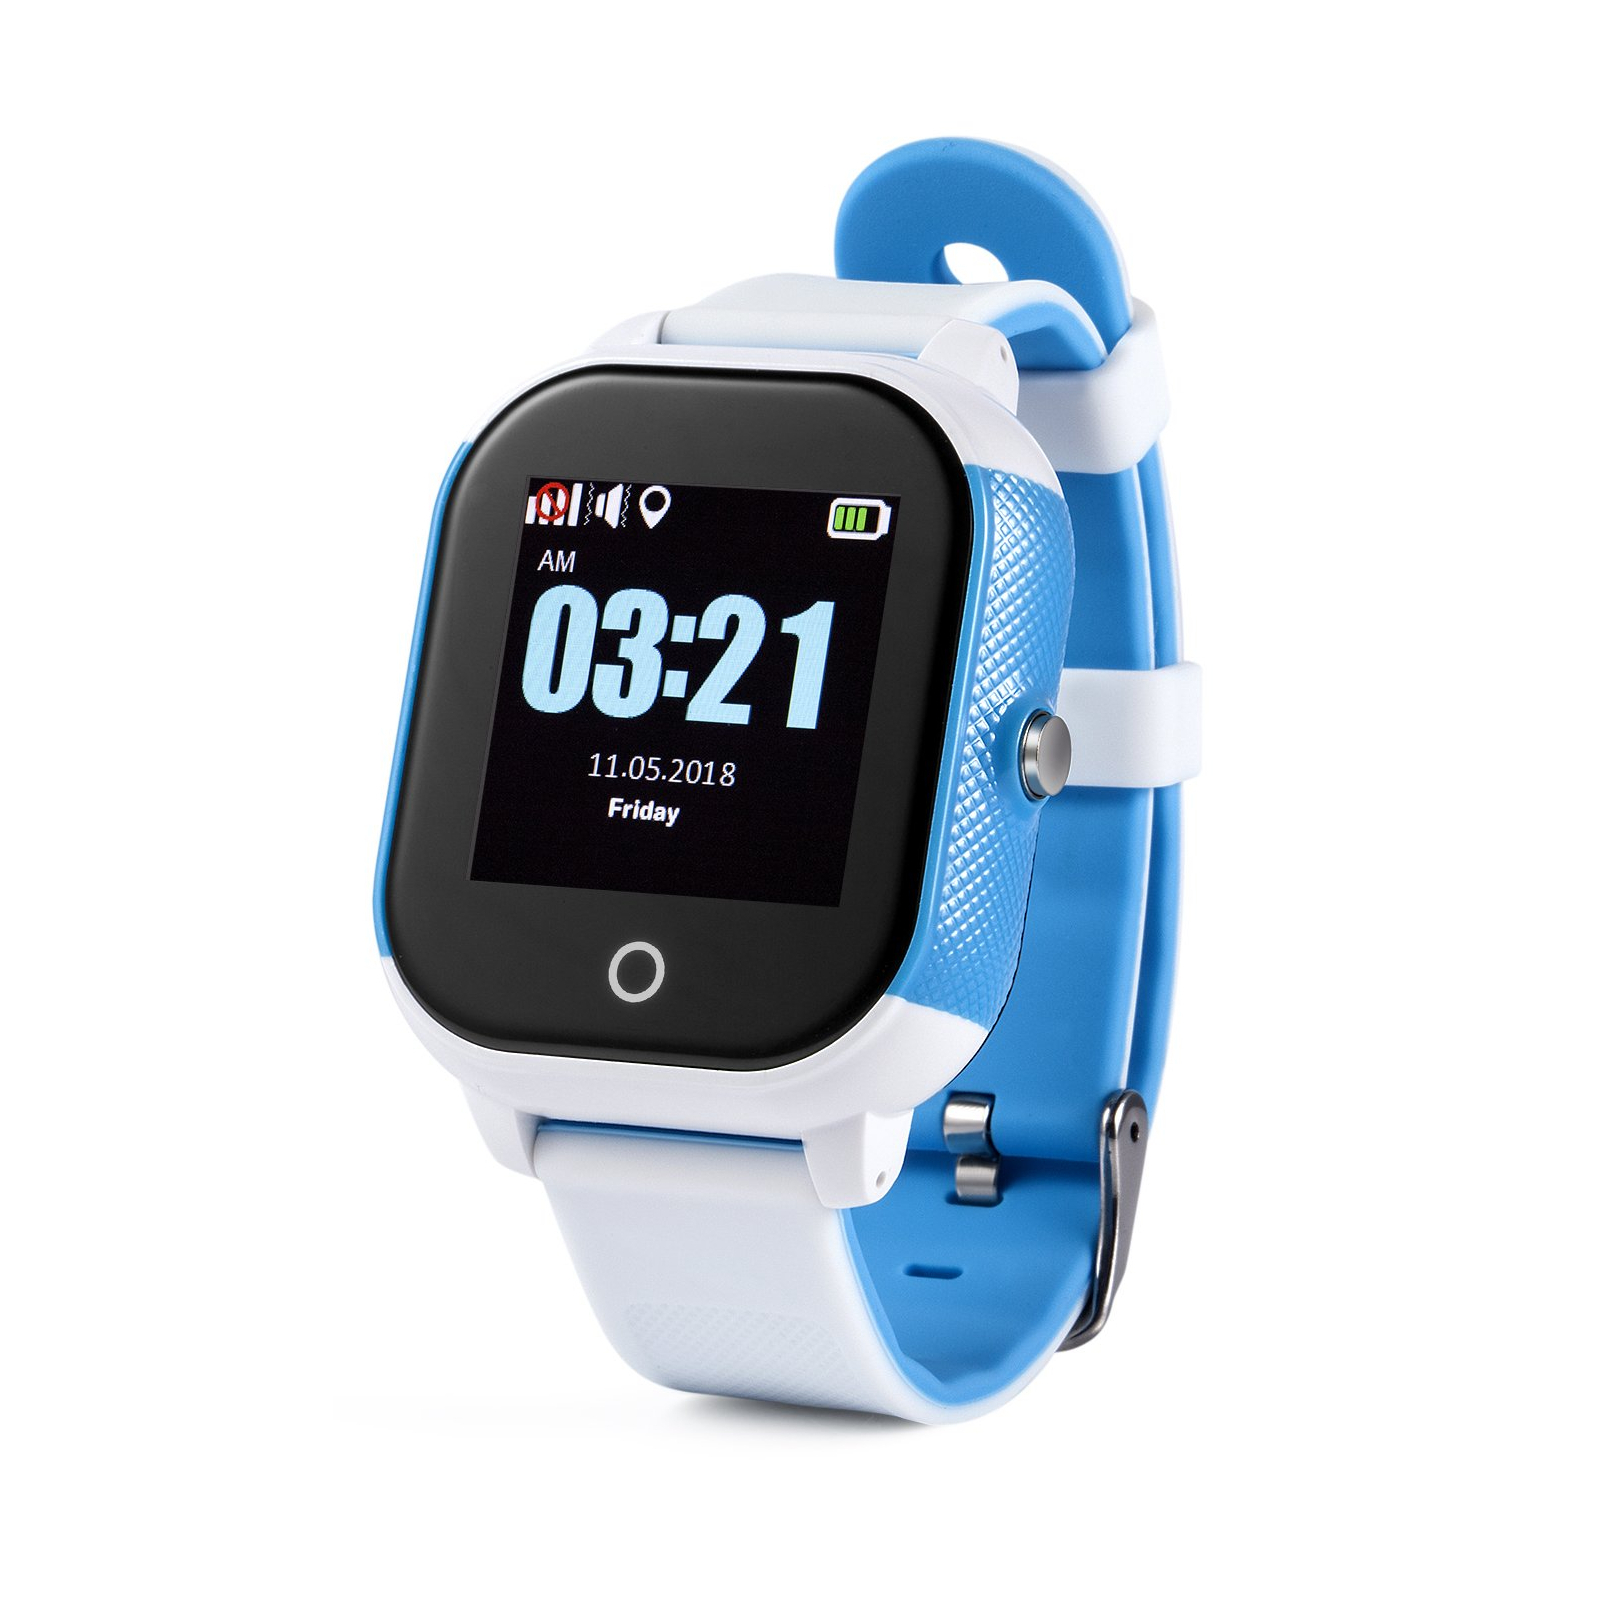 Смарт-часы UWatch GW700S Kid smart watch Blue/White (F_100014)